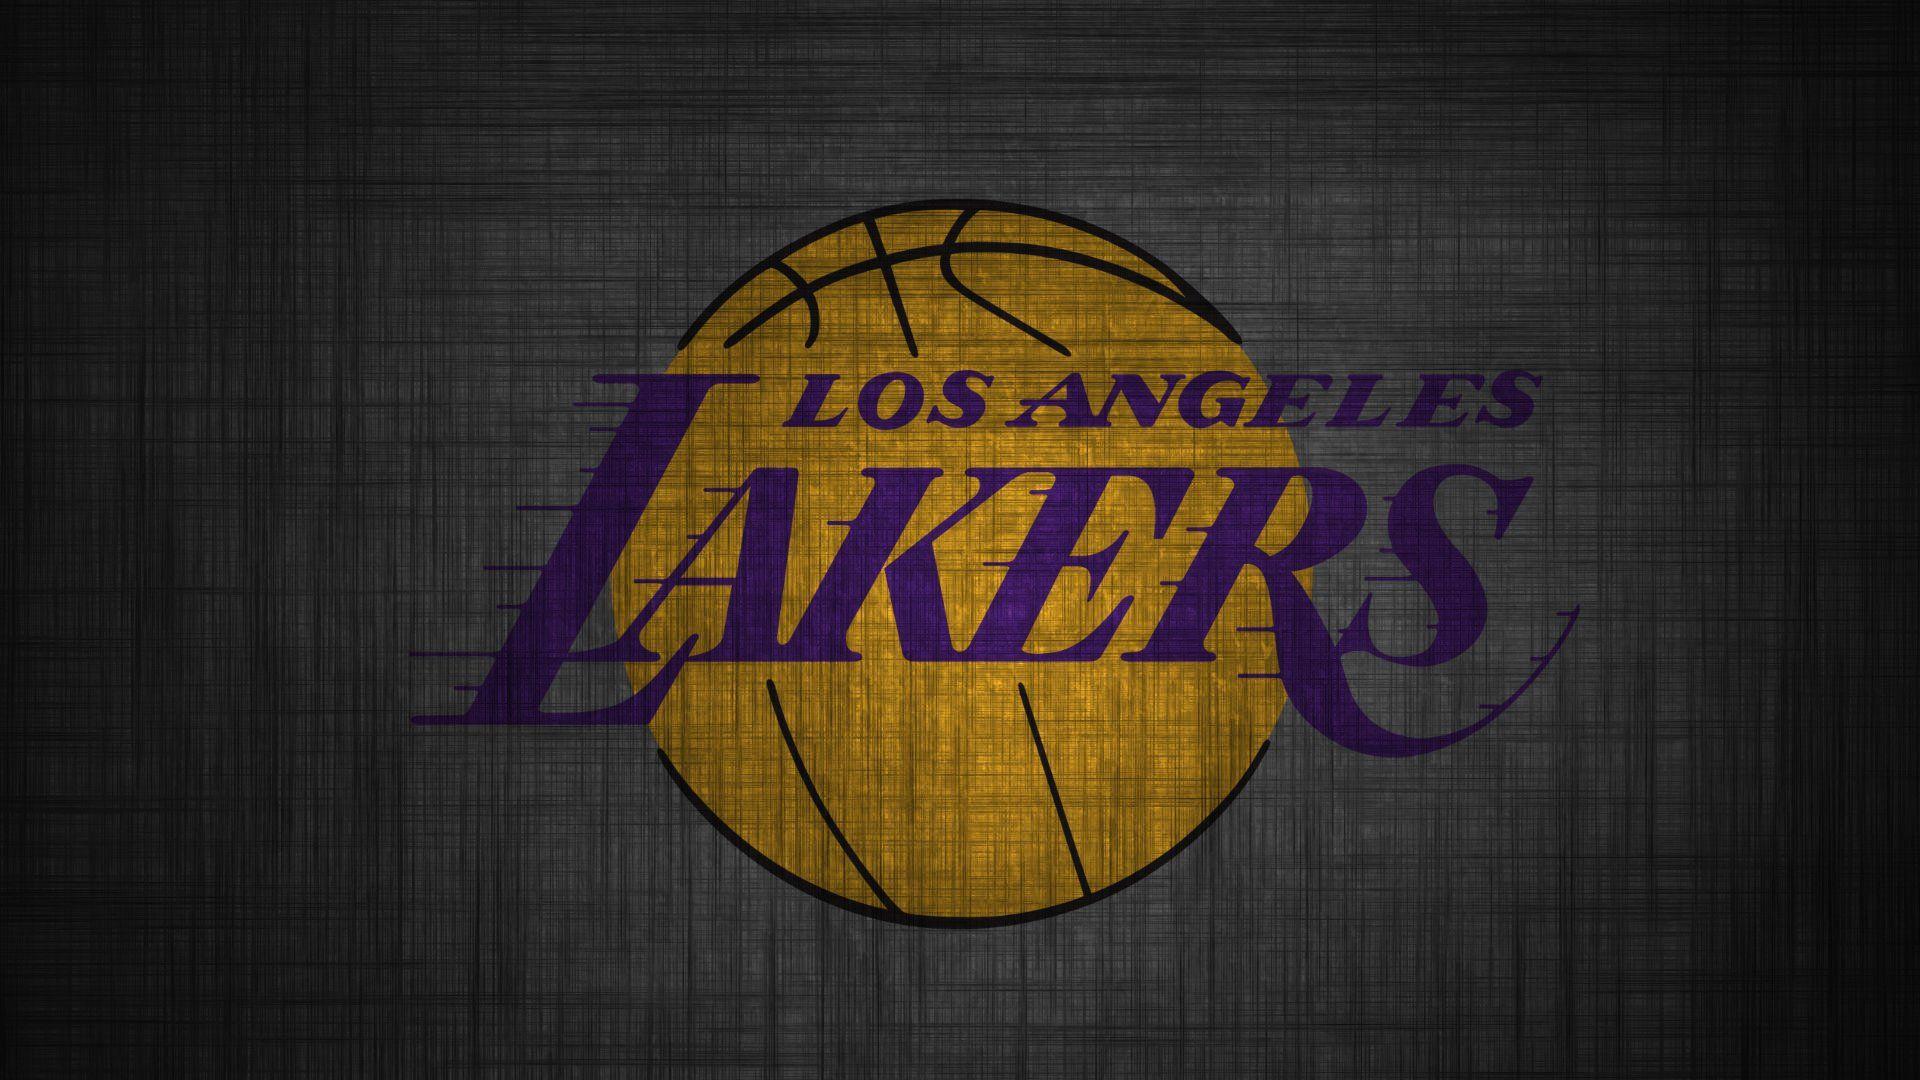 Lakers Wallpaper High Definition. Nba wallpaper, Lakers